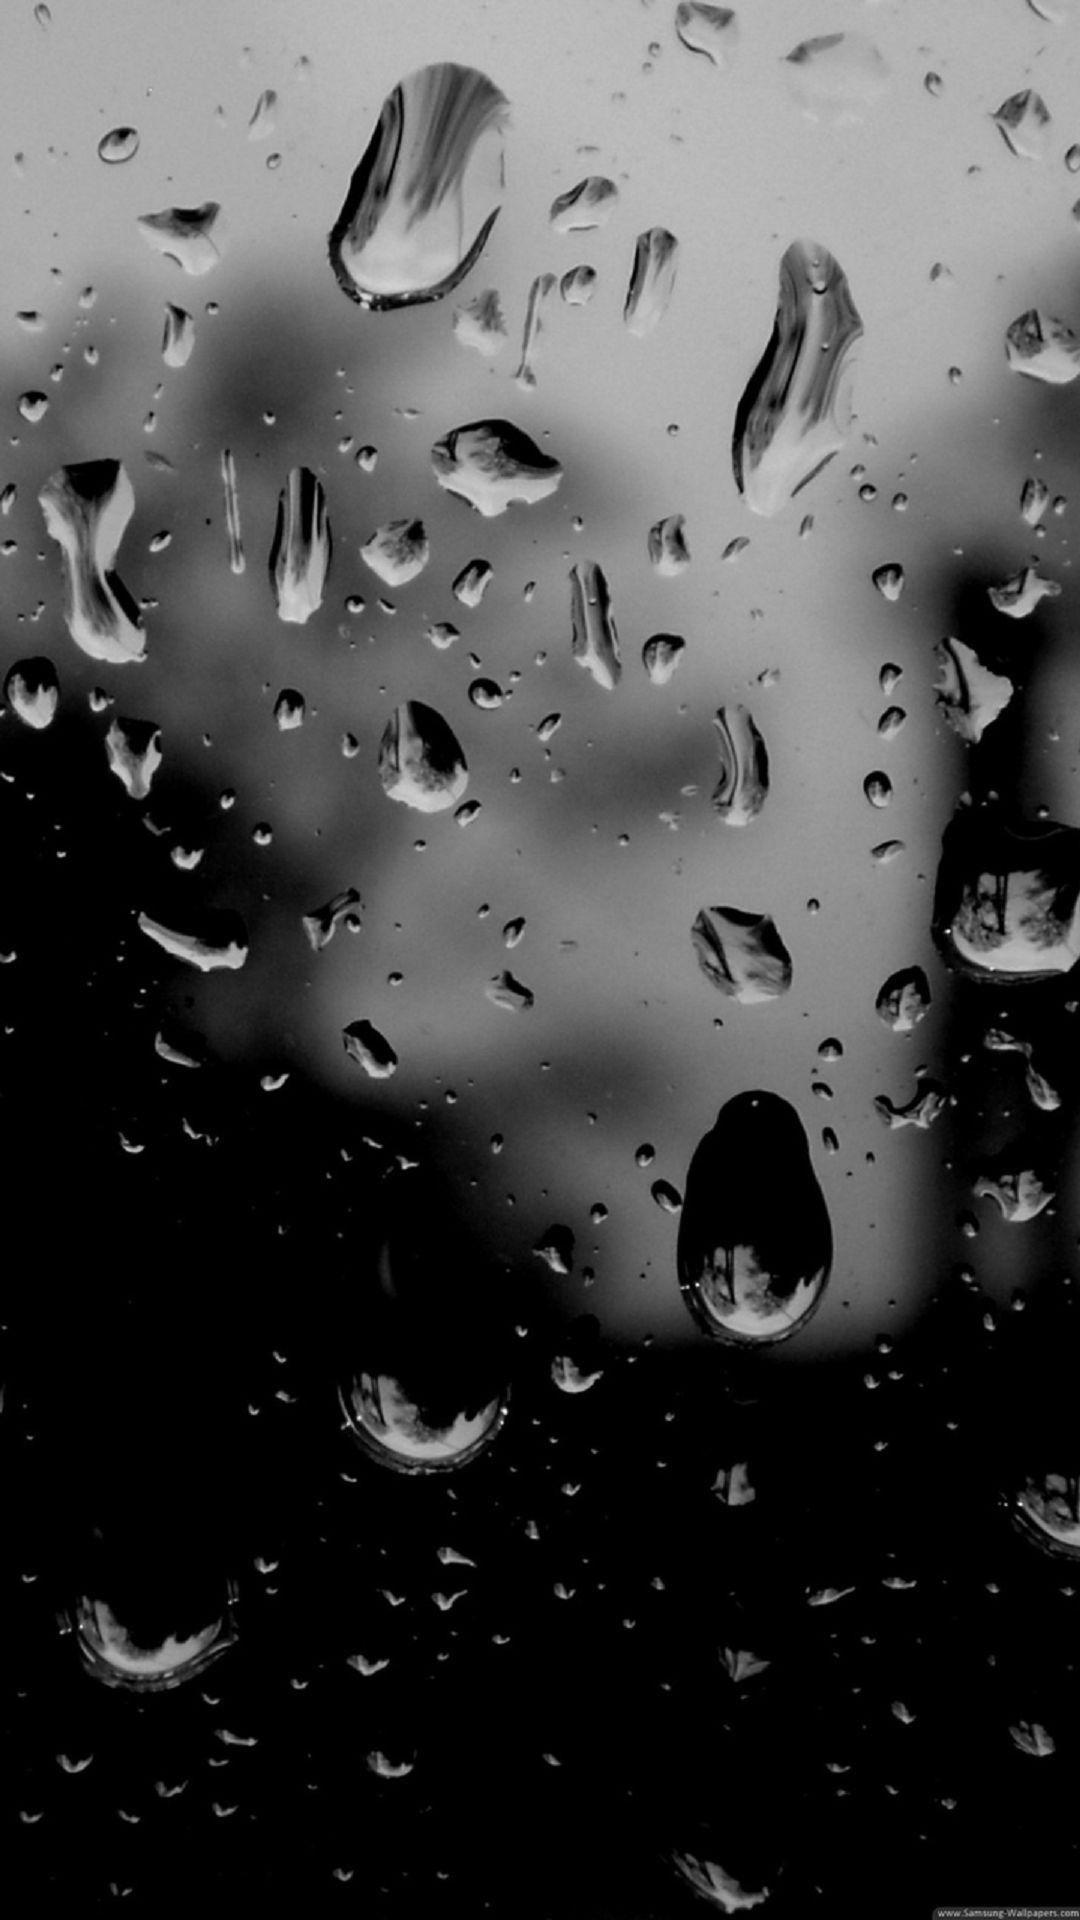 Full HD iPhone 6 wallpaper HD black and white Wallpaper, Android. Rain drops on window, Rain wallpaper, Dark wallpaper iphone